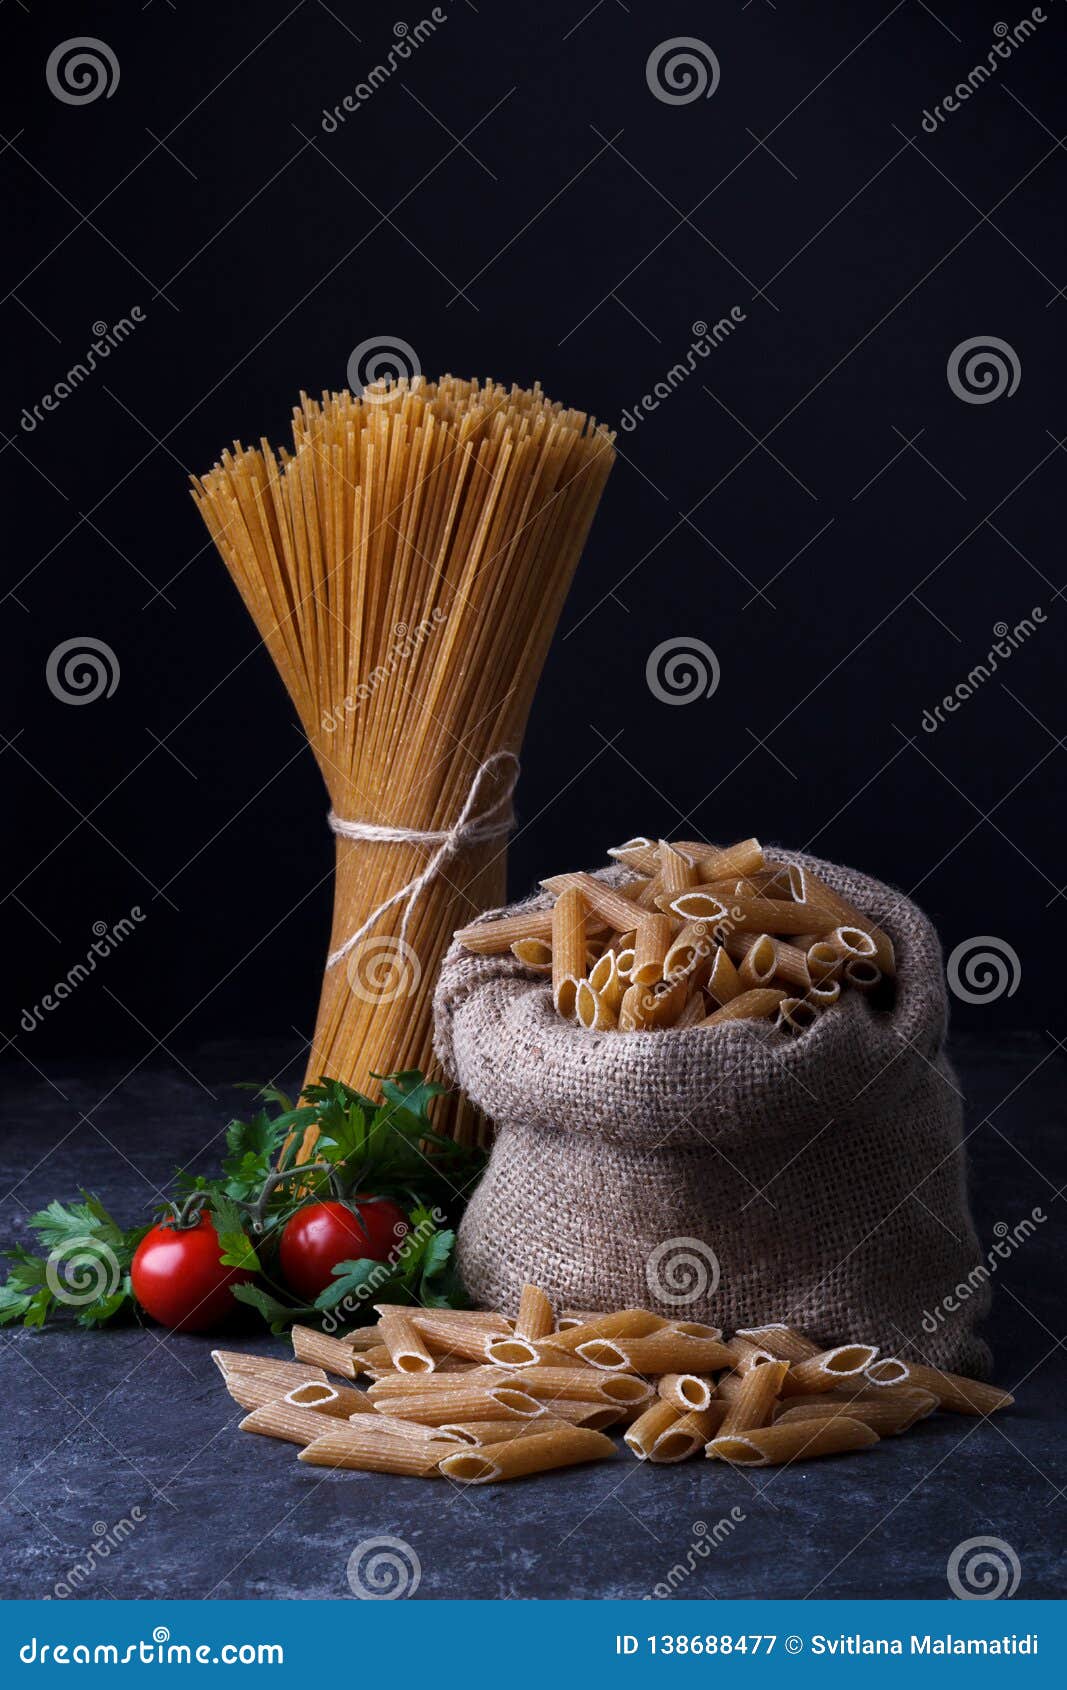 Whole Grain Dried Spaghetti Stock Image - Image of tomato, macro: 138688477